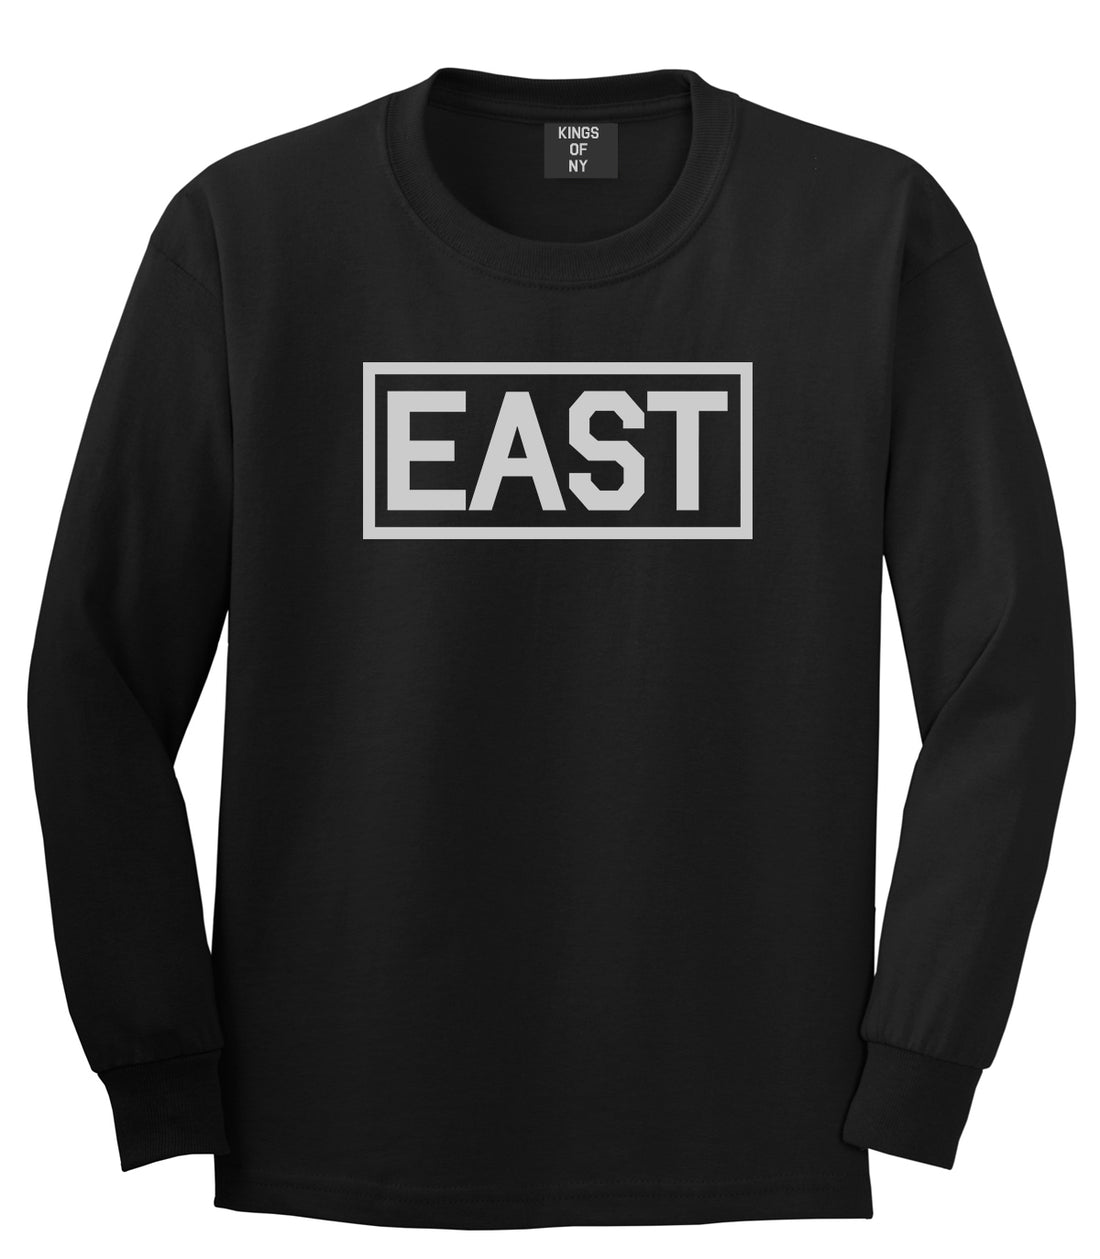 East Box Logo Mens Black Long Sleeve T-Shirt by Kings Of NY